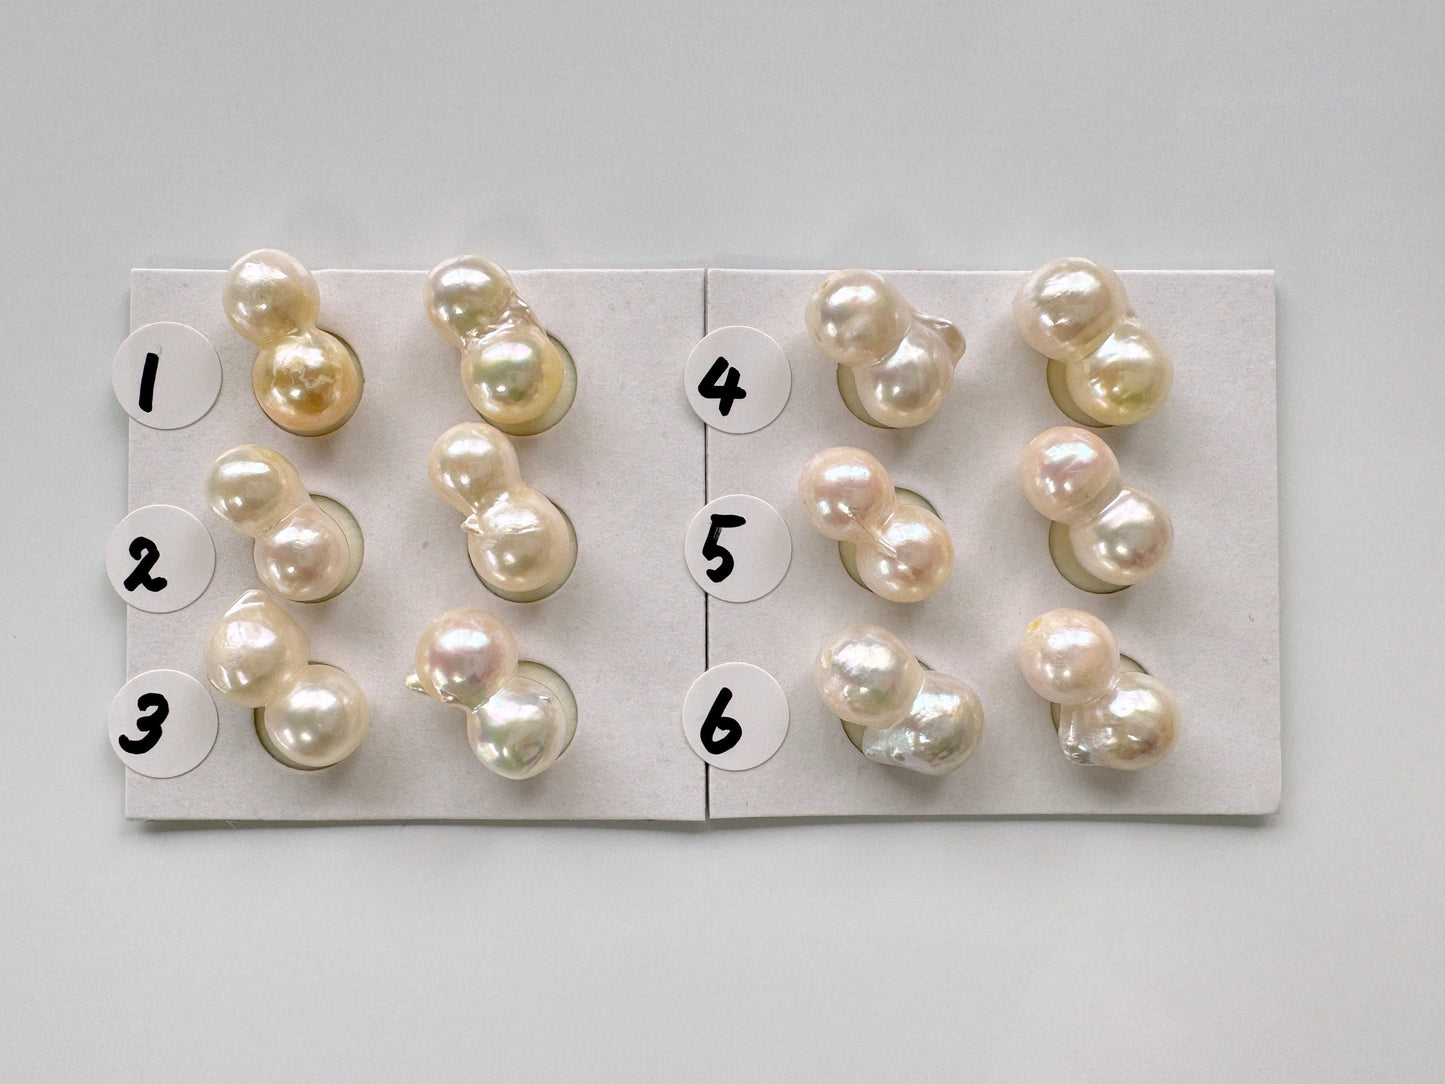 Japanese White Akoya Cultured Pearl, Twin Pearls loose, Peanut shape, Price per pair, Salt water pearl